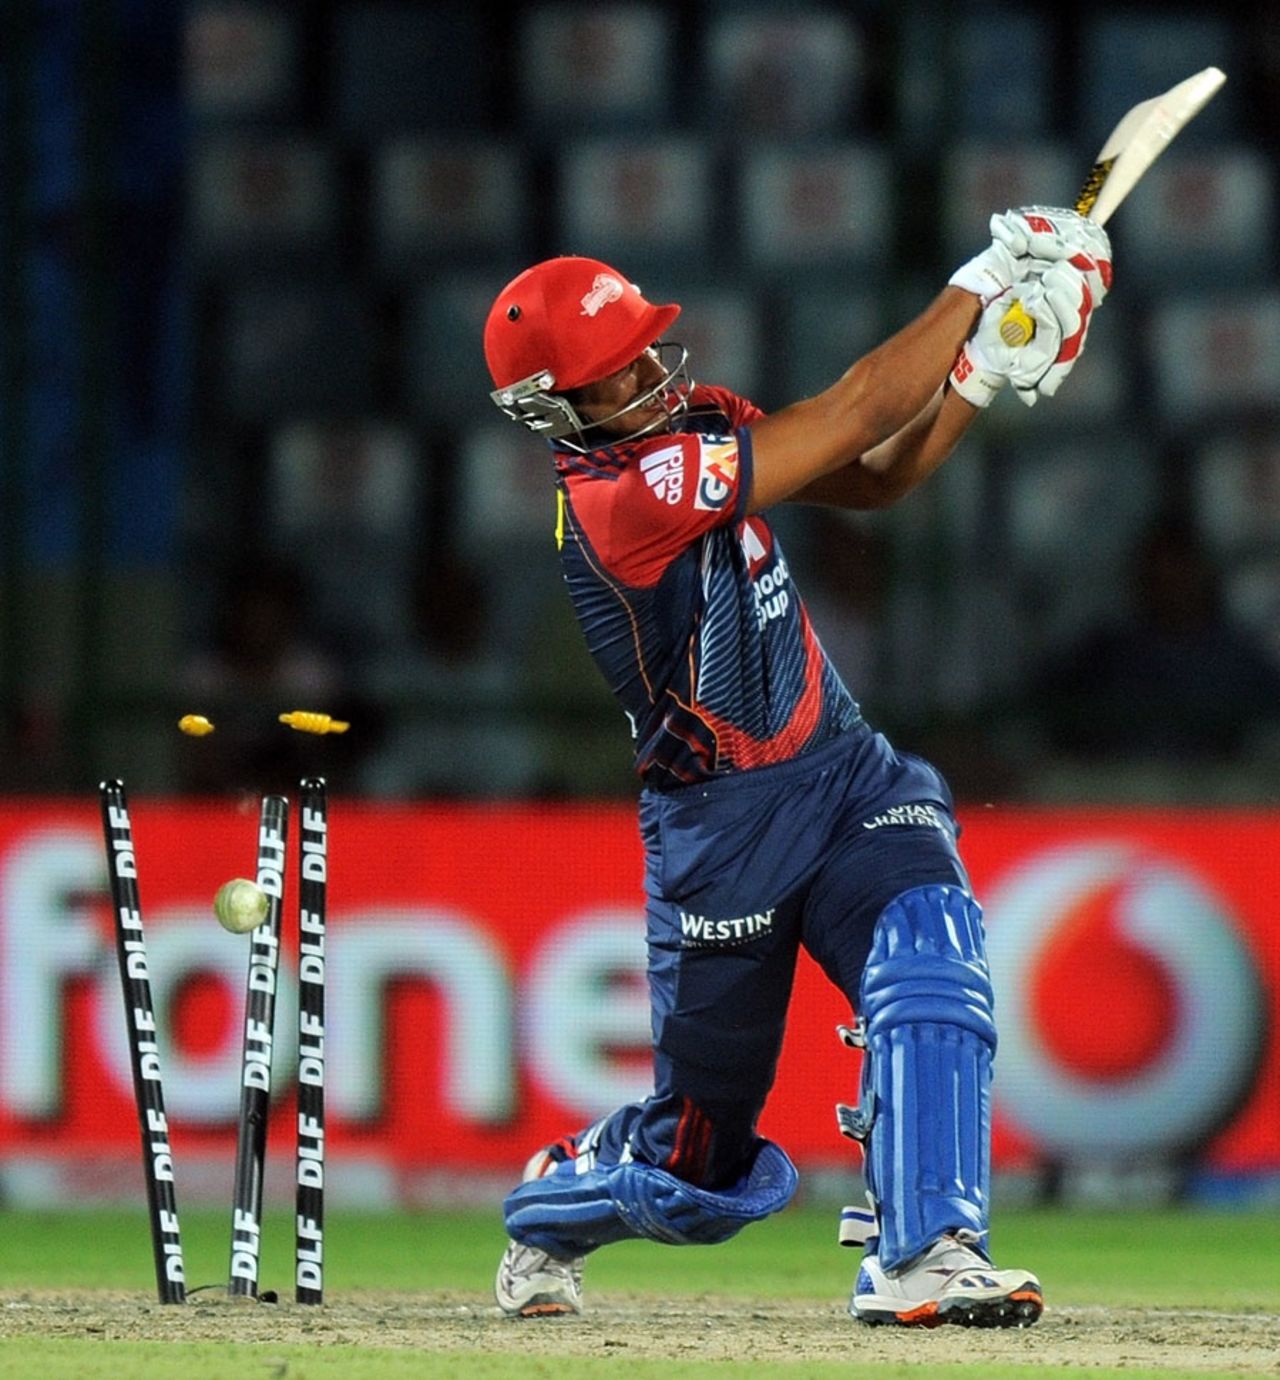 Yogesh Nagar was bowled by Daniel Christian for 23, Delhi Daredevils v Deccan Chargers, IPL 2011, Delhi, April 19, 2011